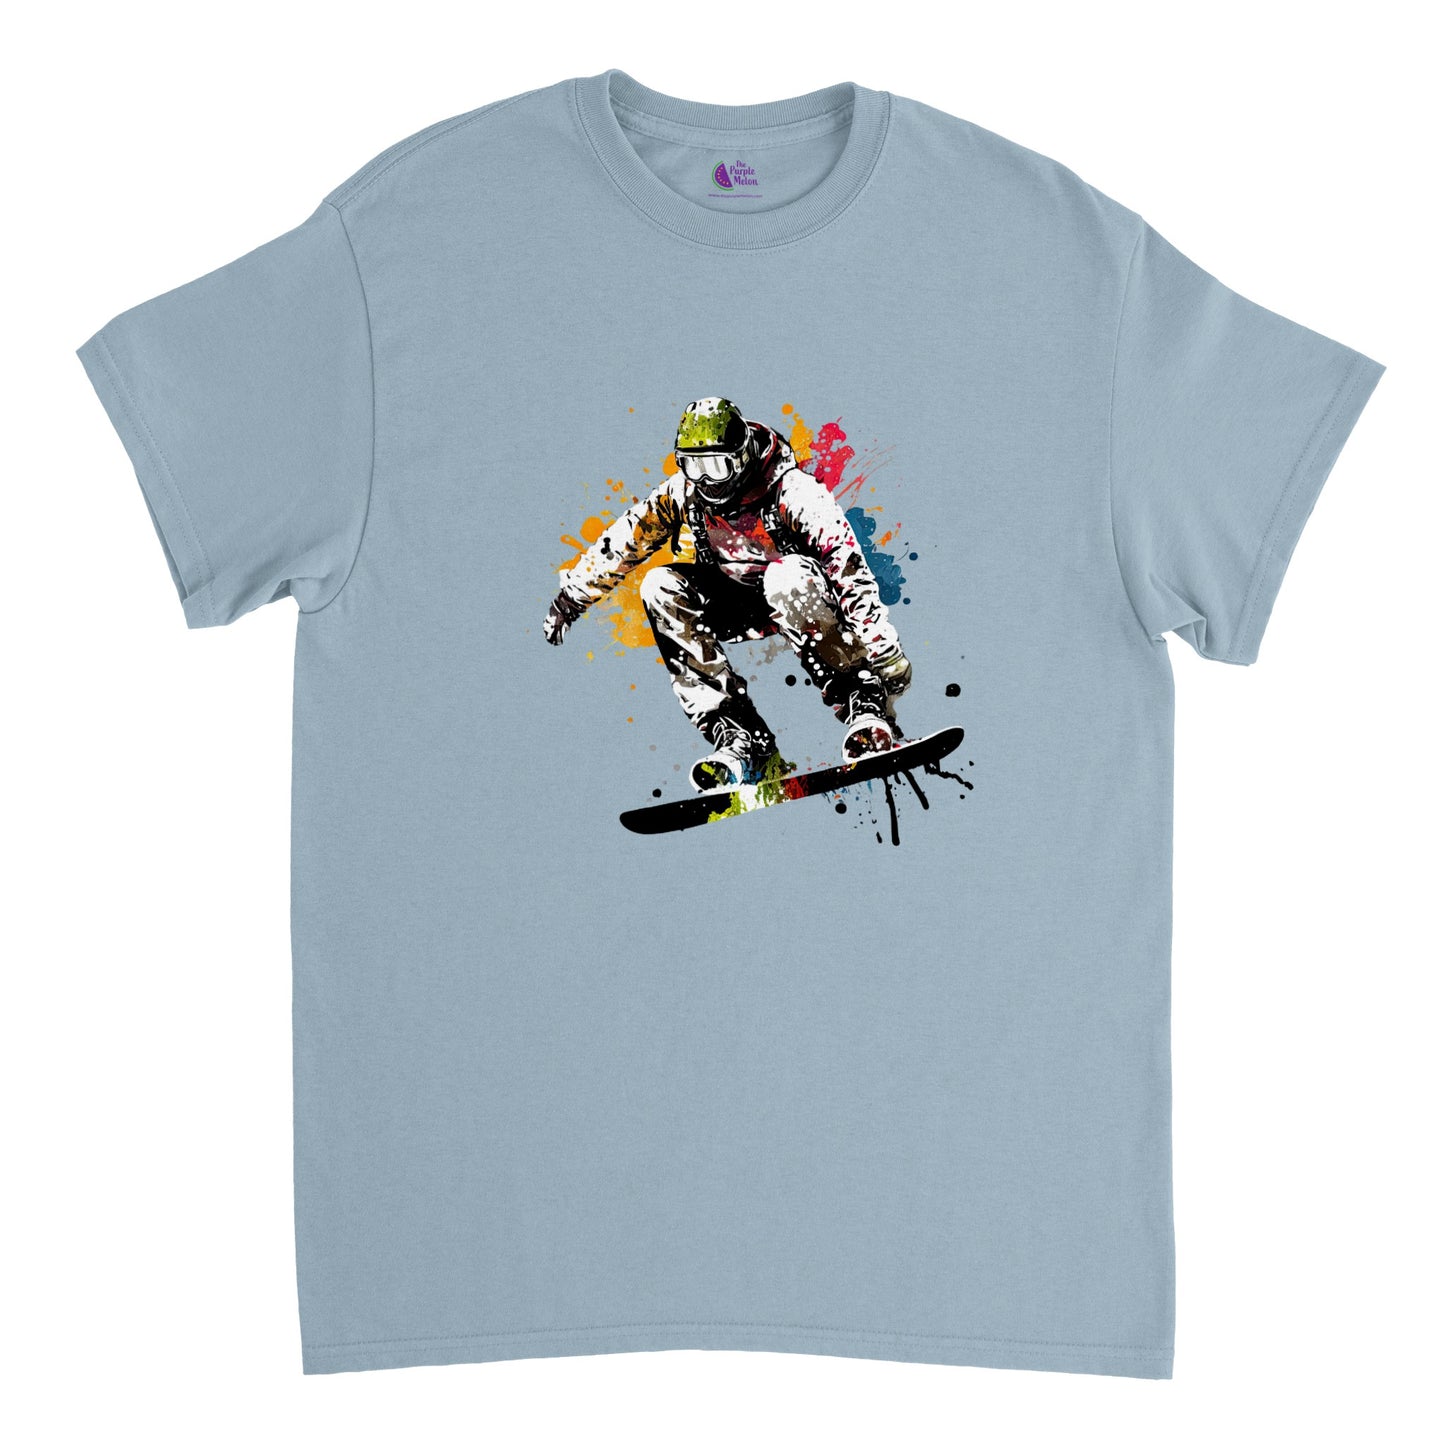 Light blue t-shirt with a snowboarder print